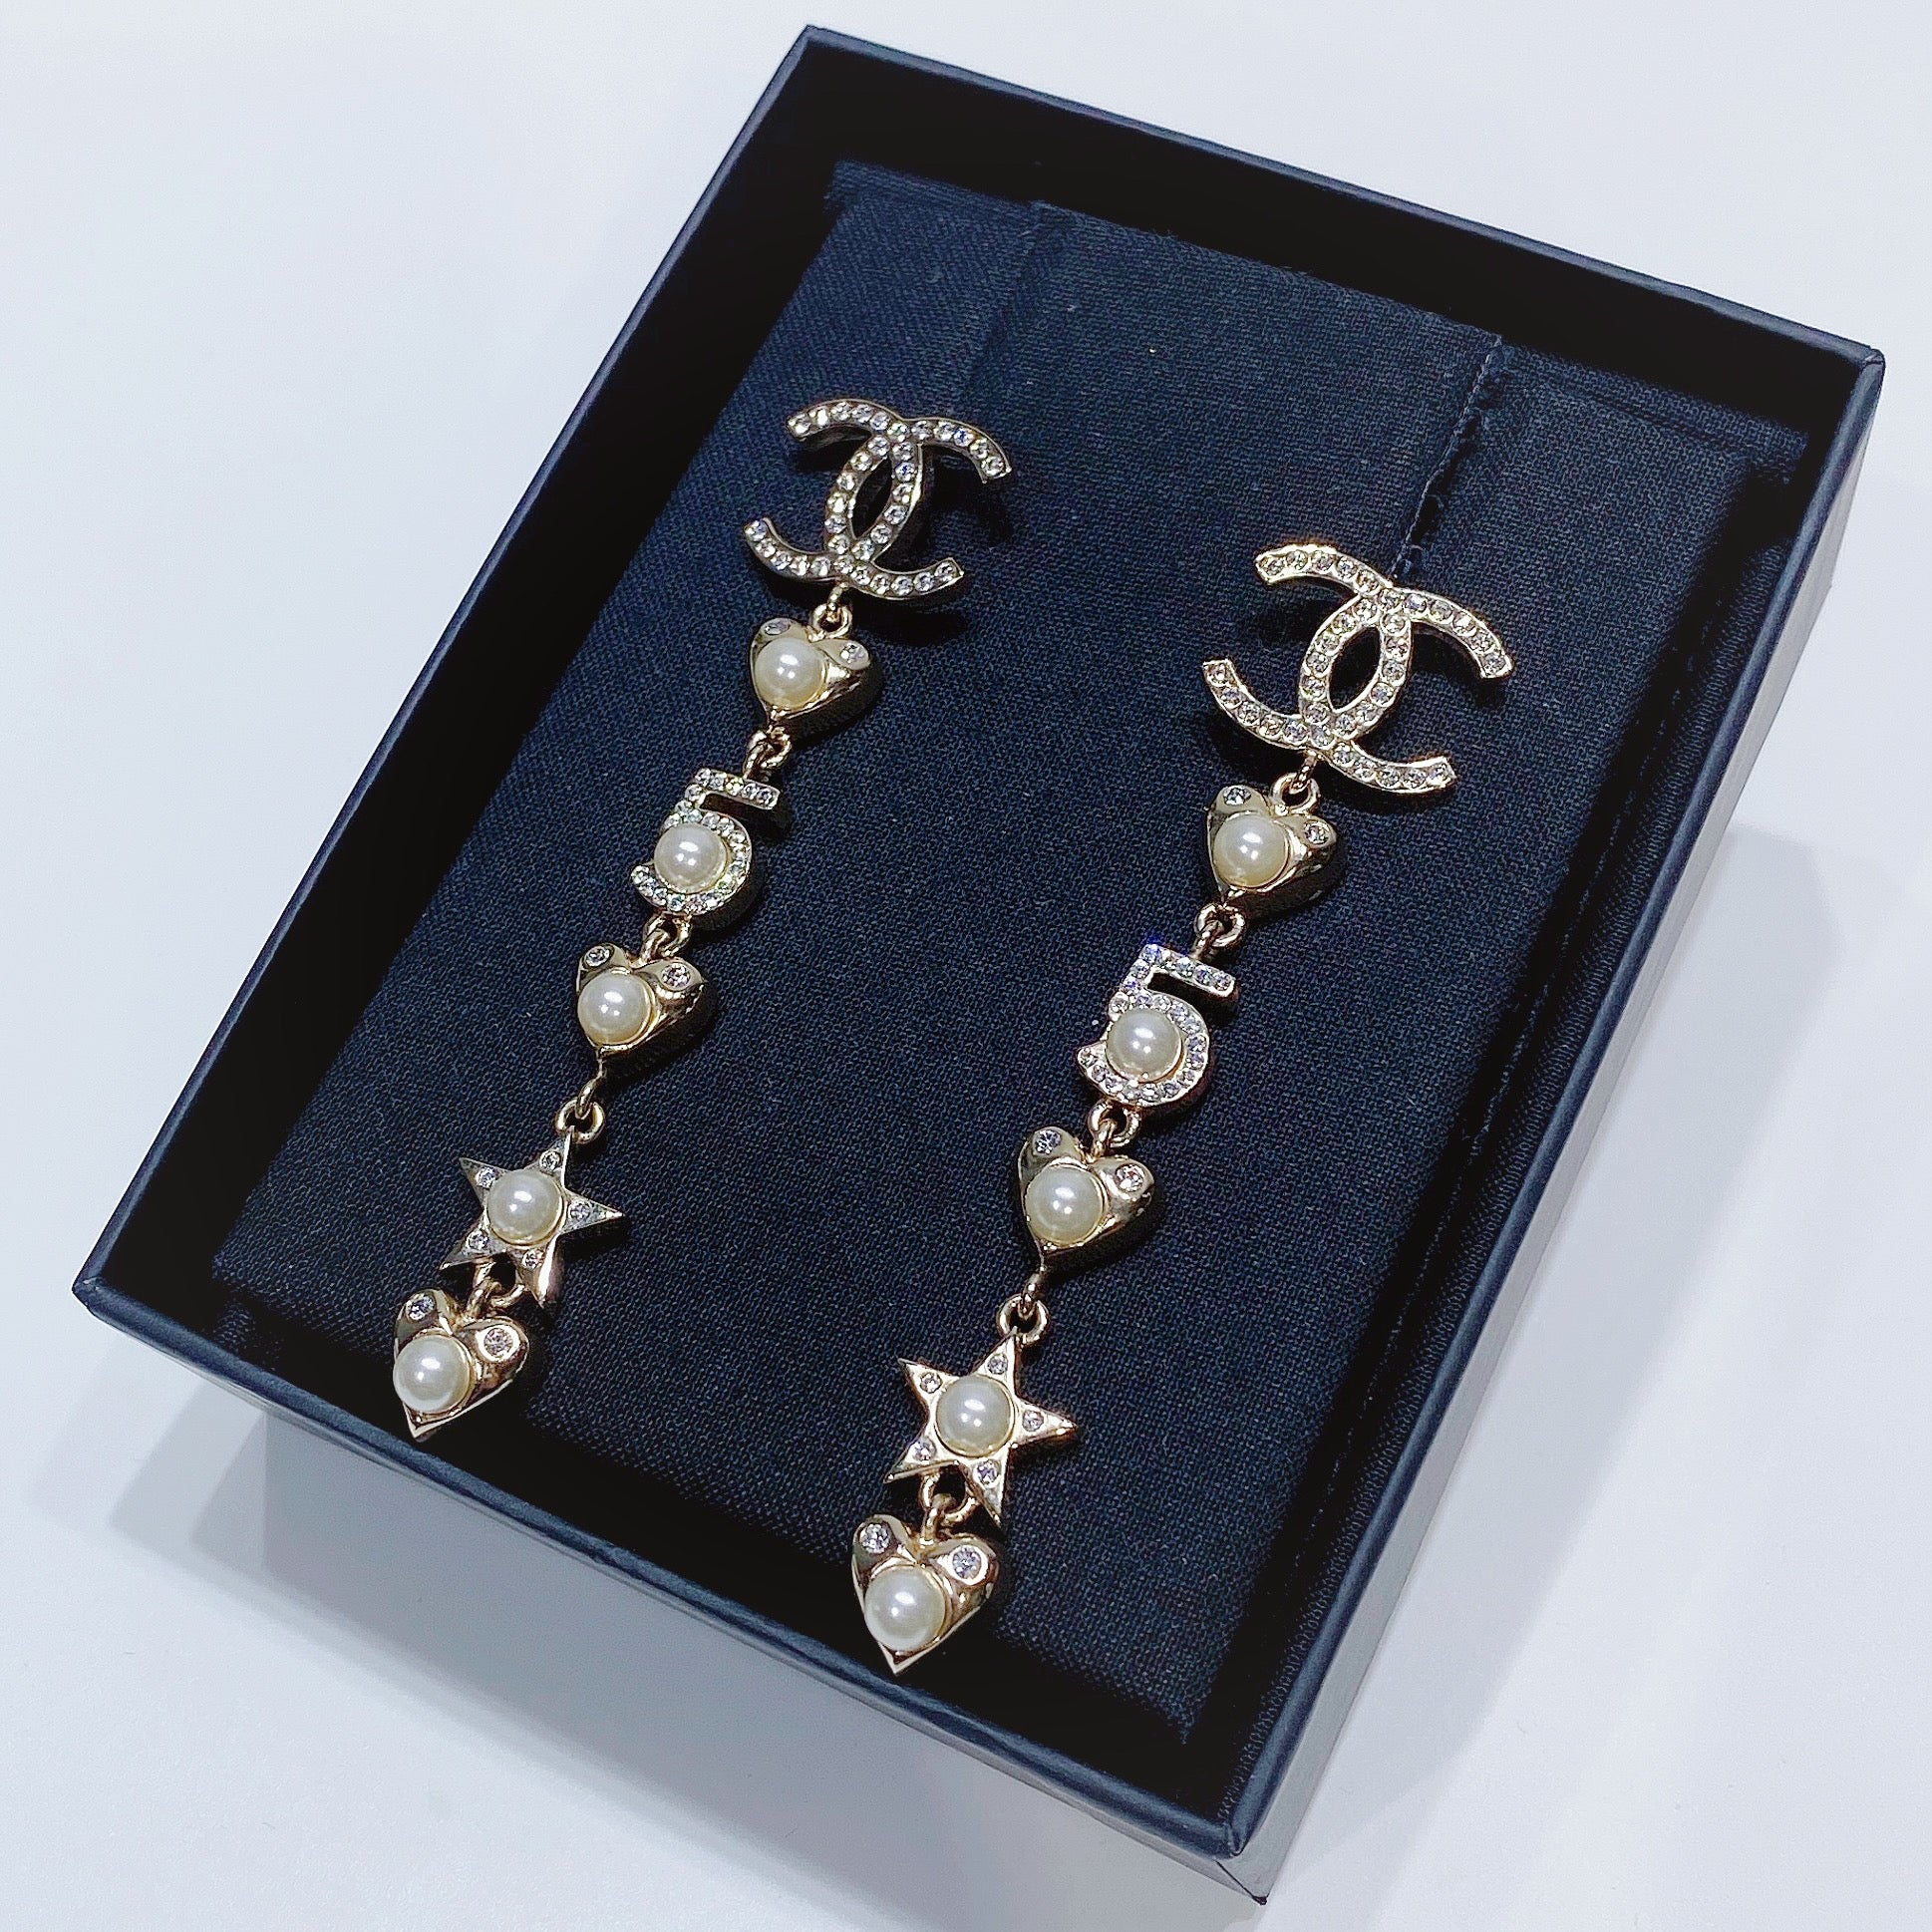 Repurposed Copper Chanel Heart Necklace – Petals Jewelry Designs